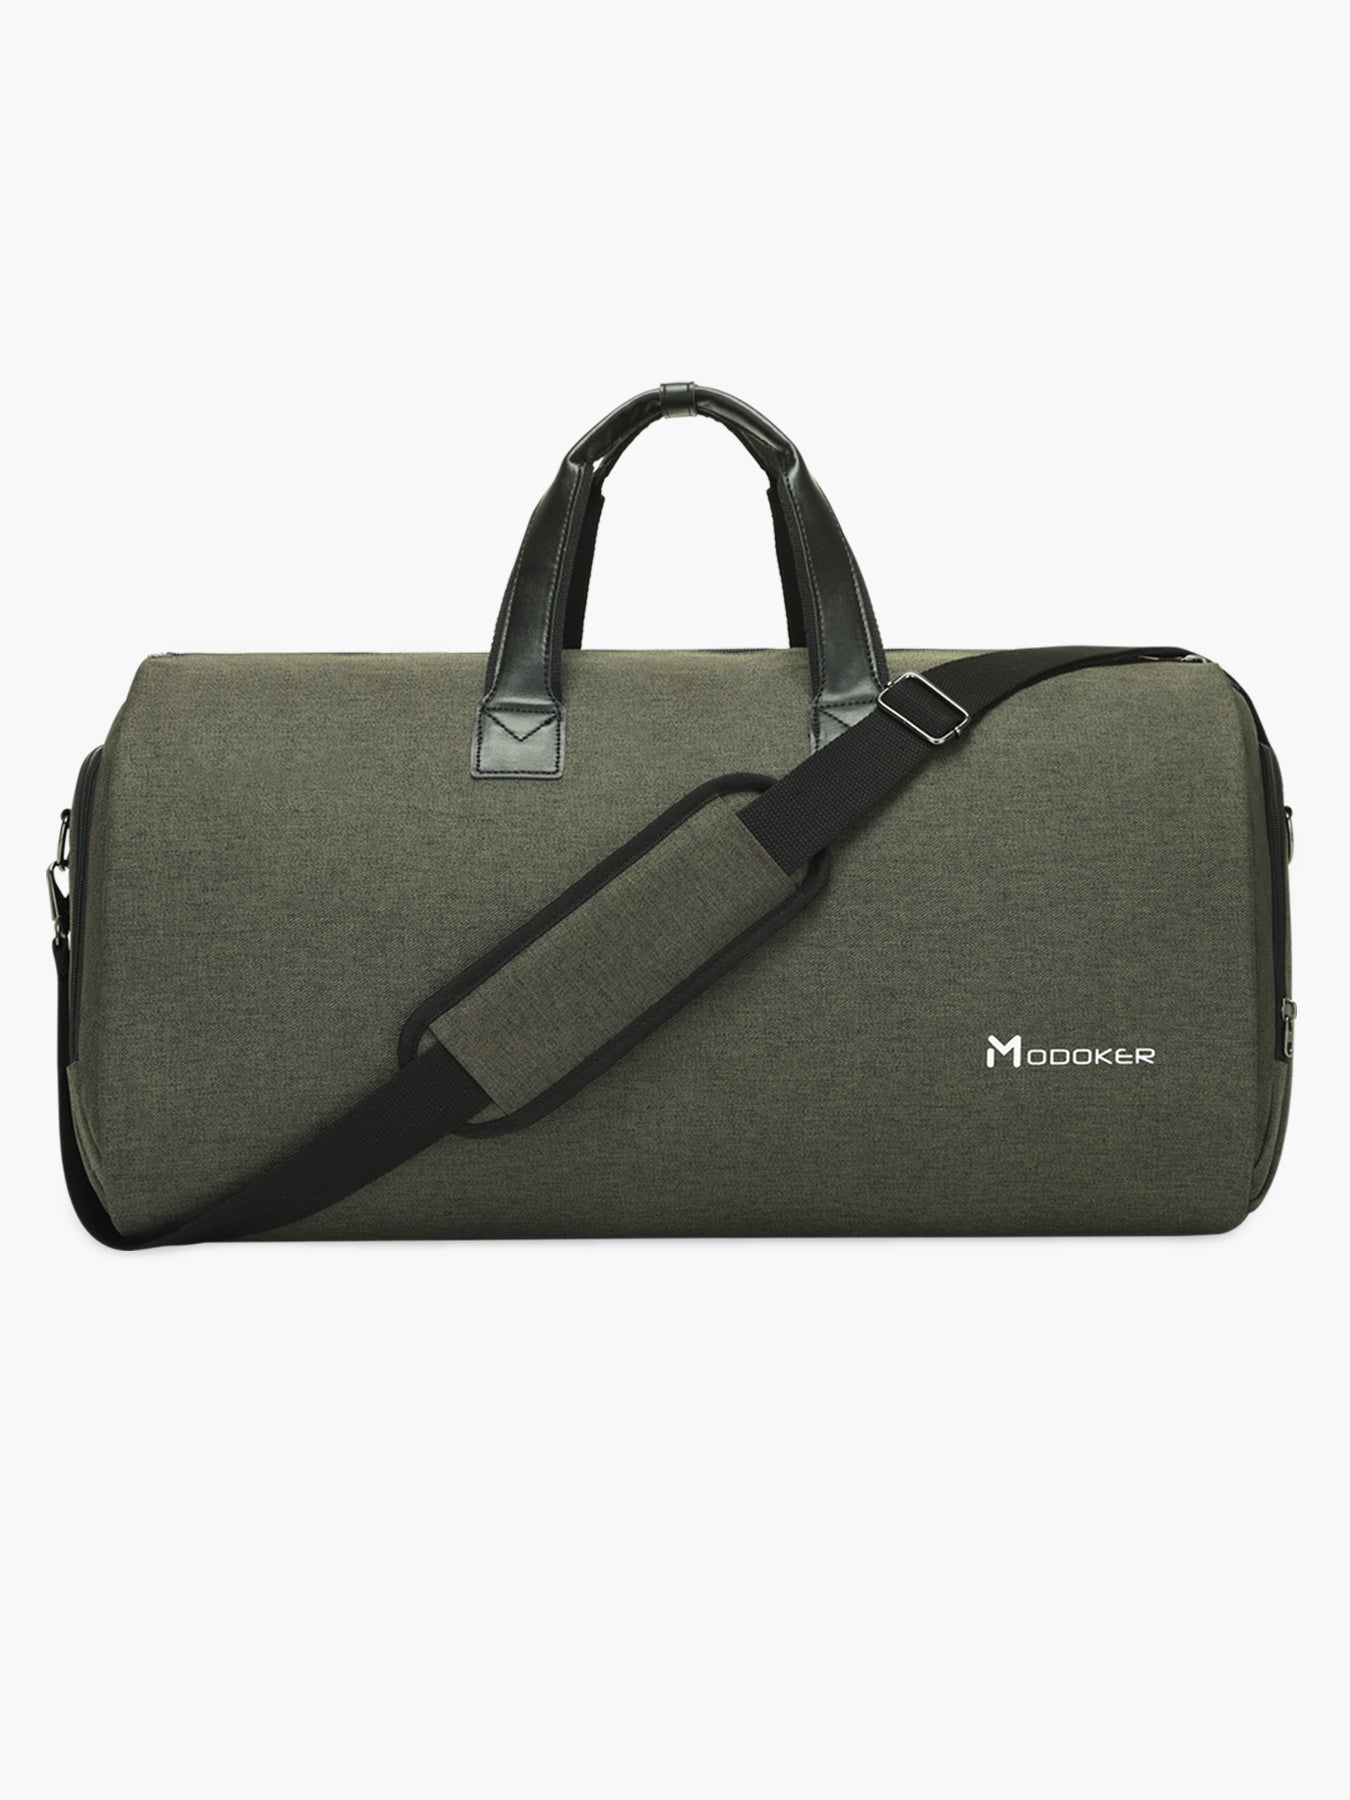 modoker | Bags | Convertible Garment Bag With Shoulder Strap Luggage |  Poshmark